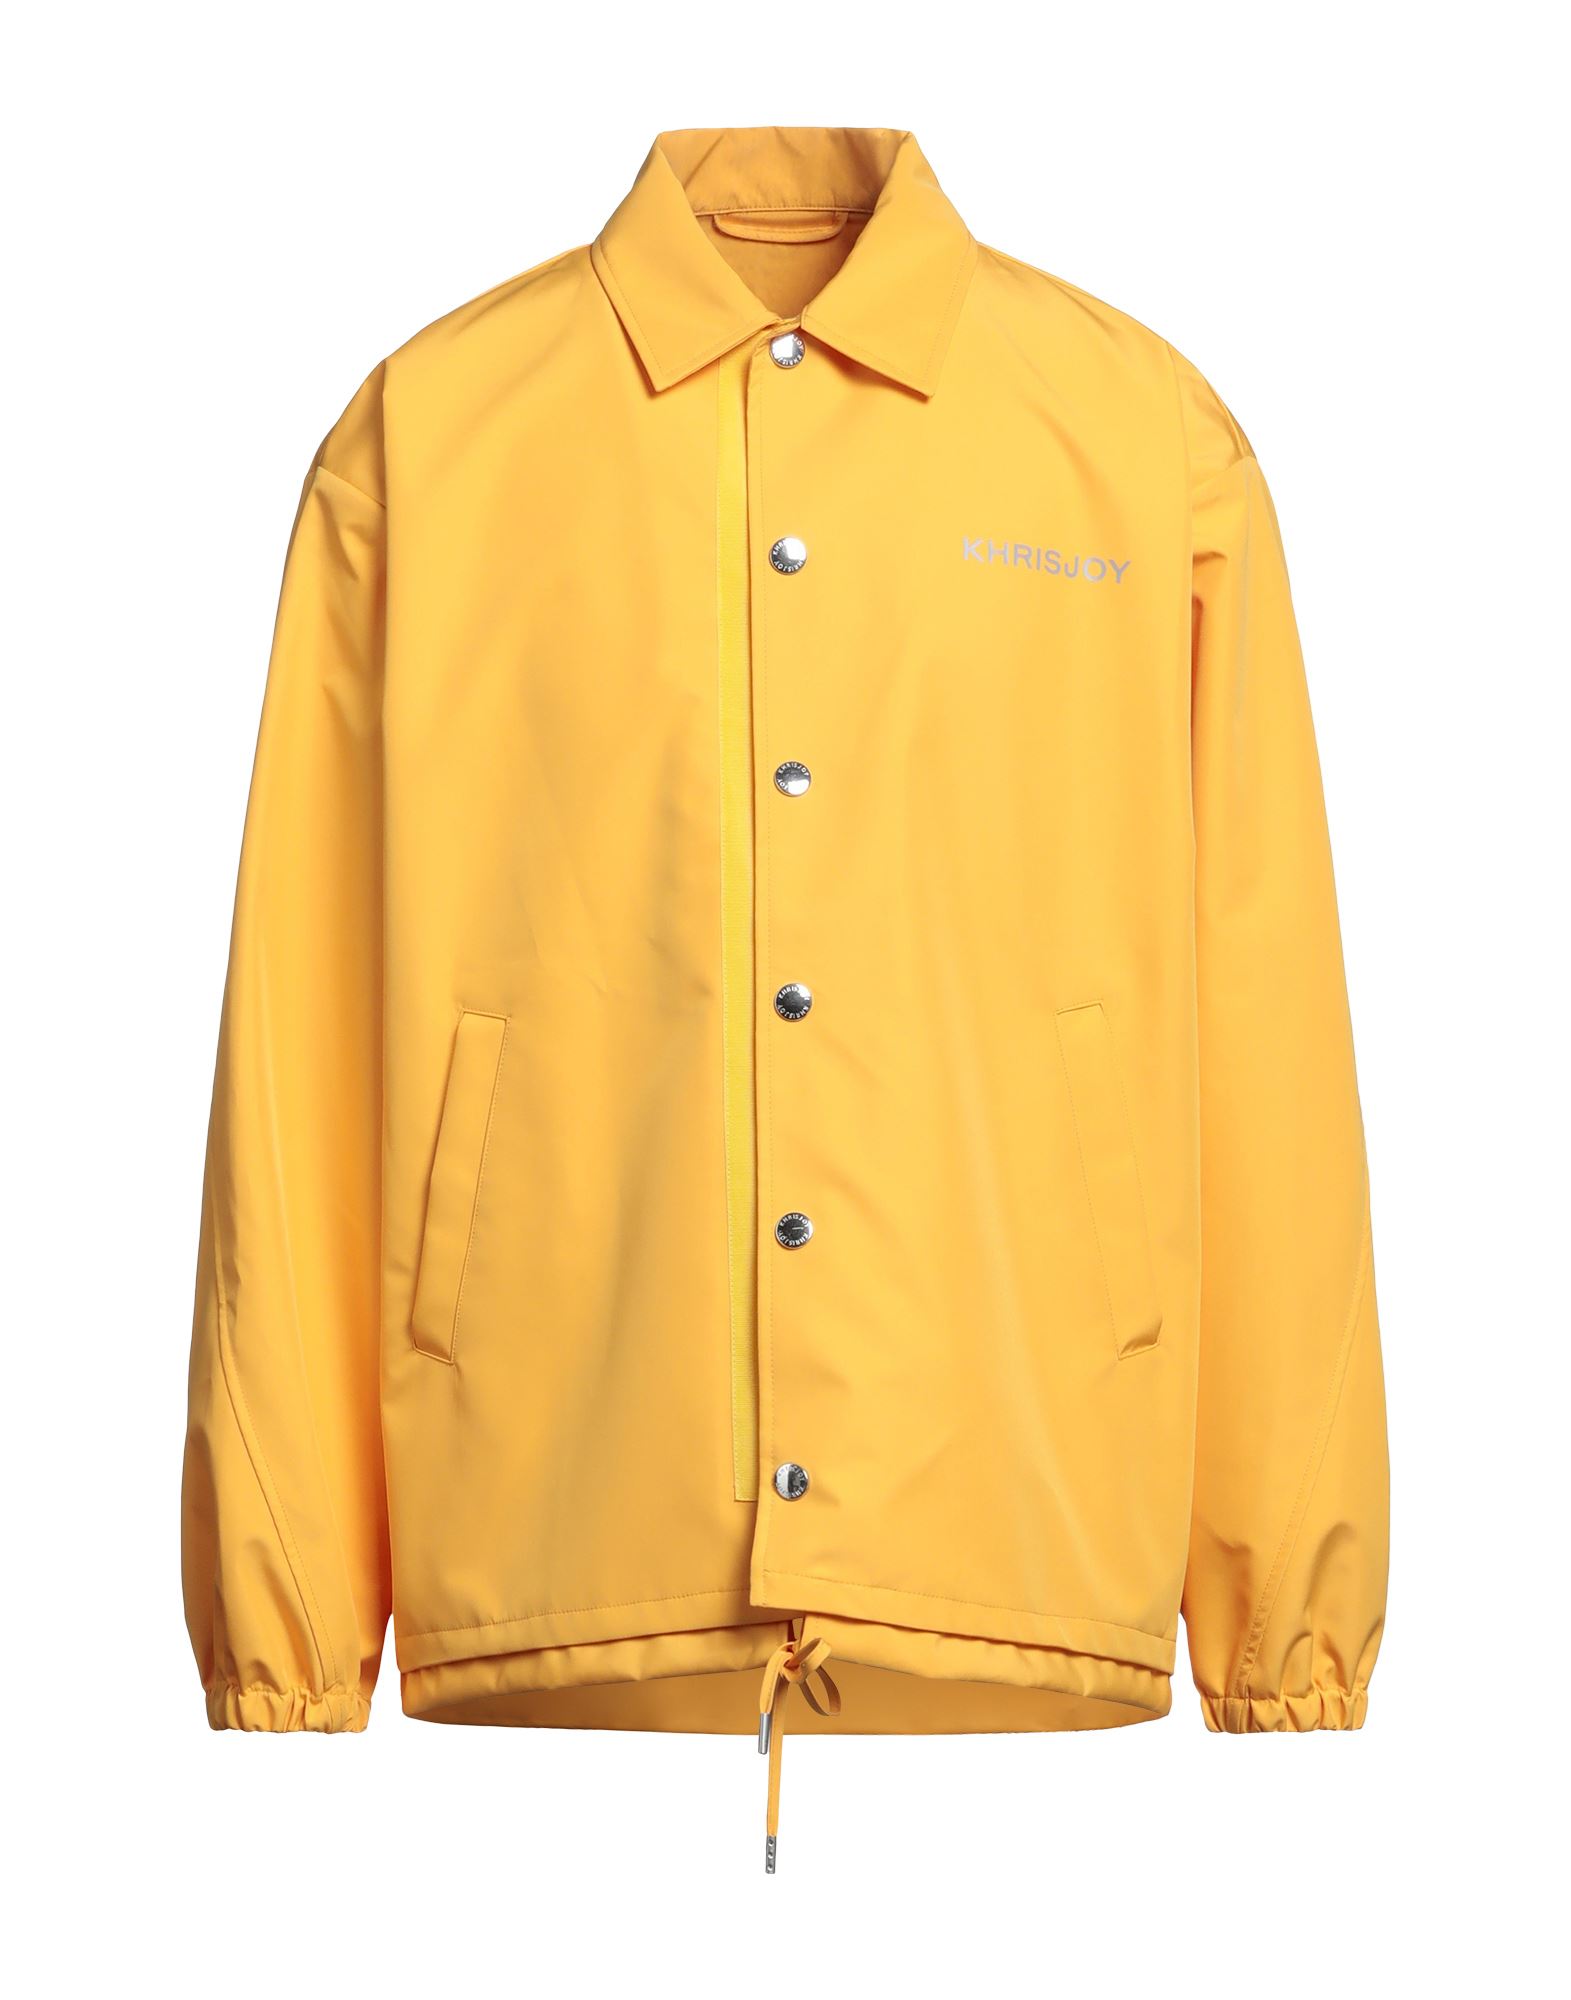 Khrisjoy Overcoats In Yellow